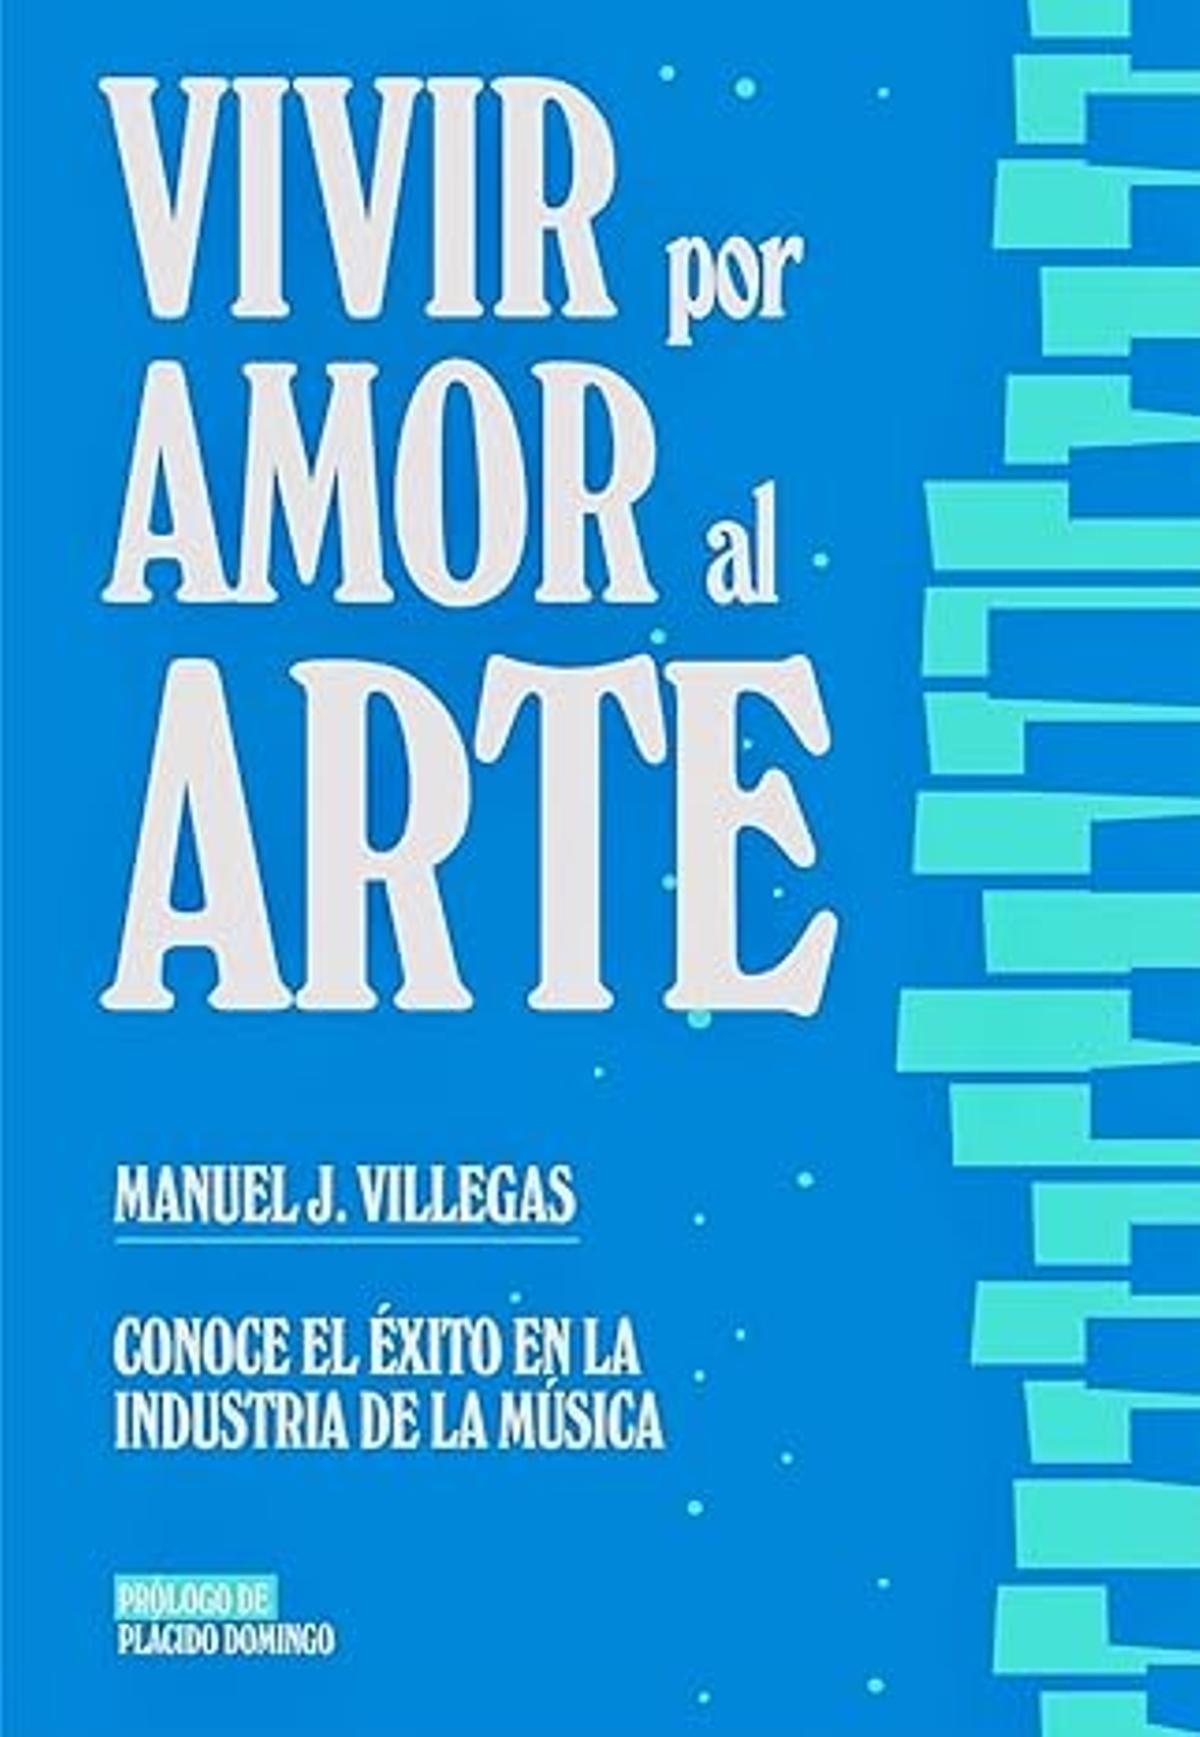 Libro de Manuel Villegas &quot;Vivir por amor al arte&quot;